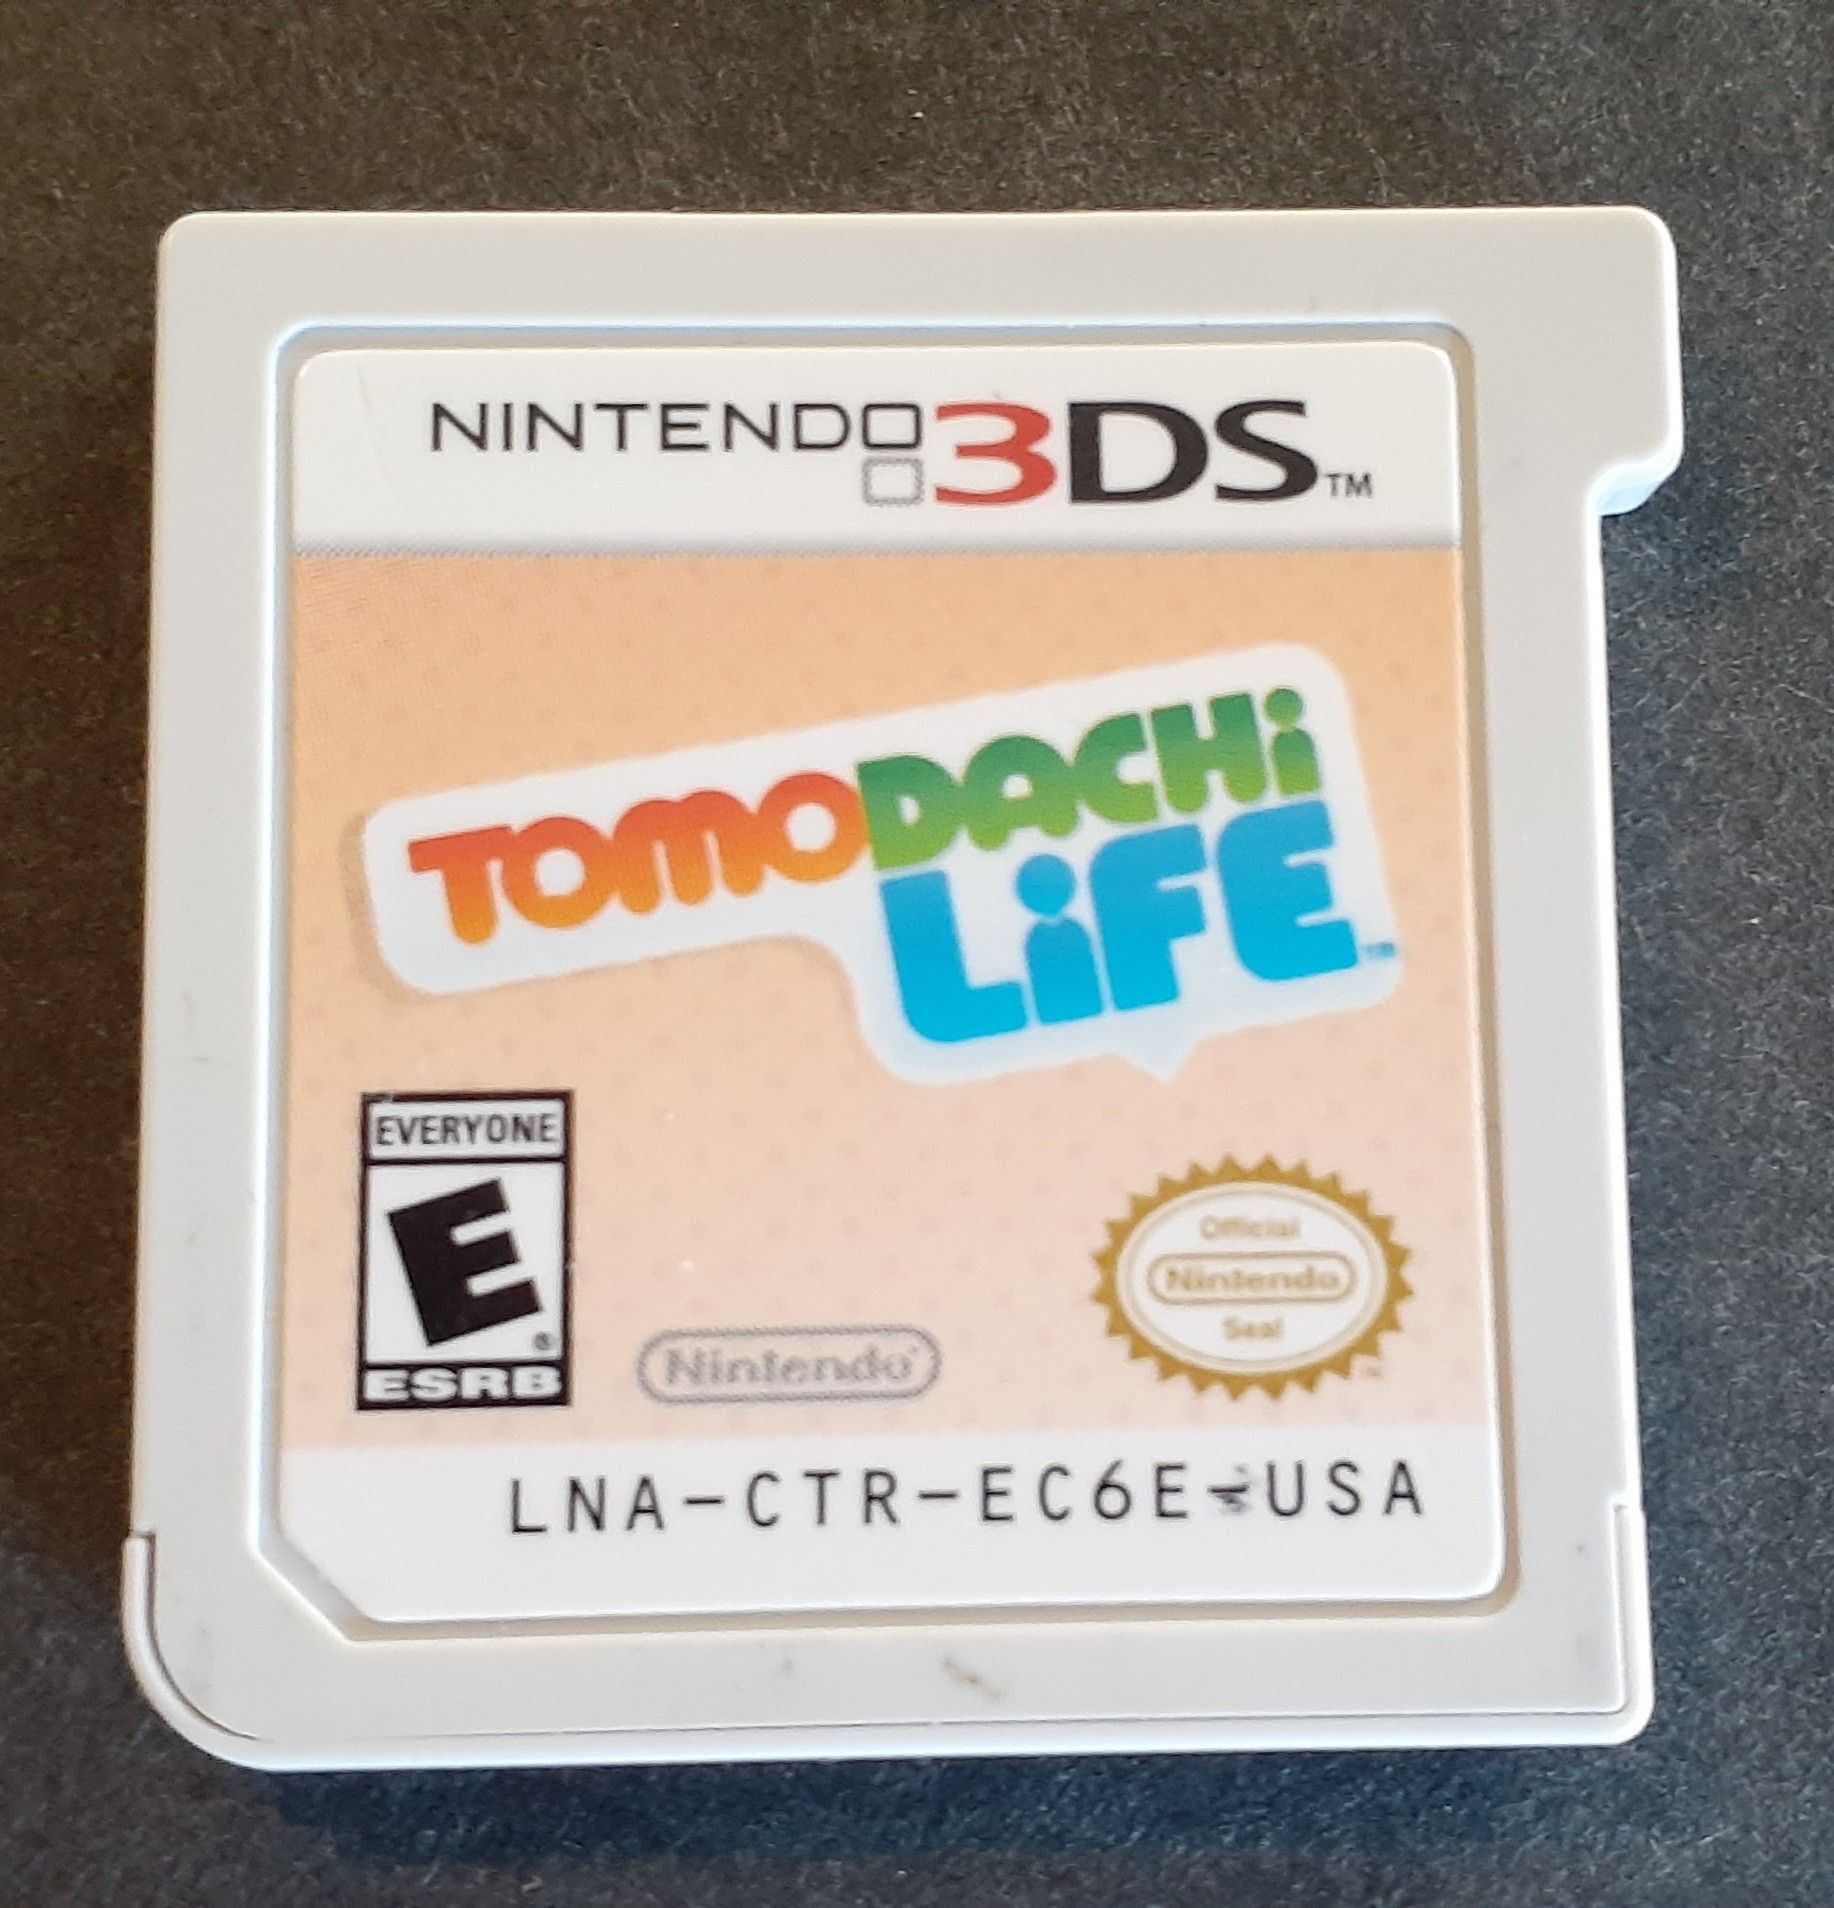 Tomodach life NINTENDO 3DS